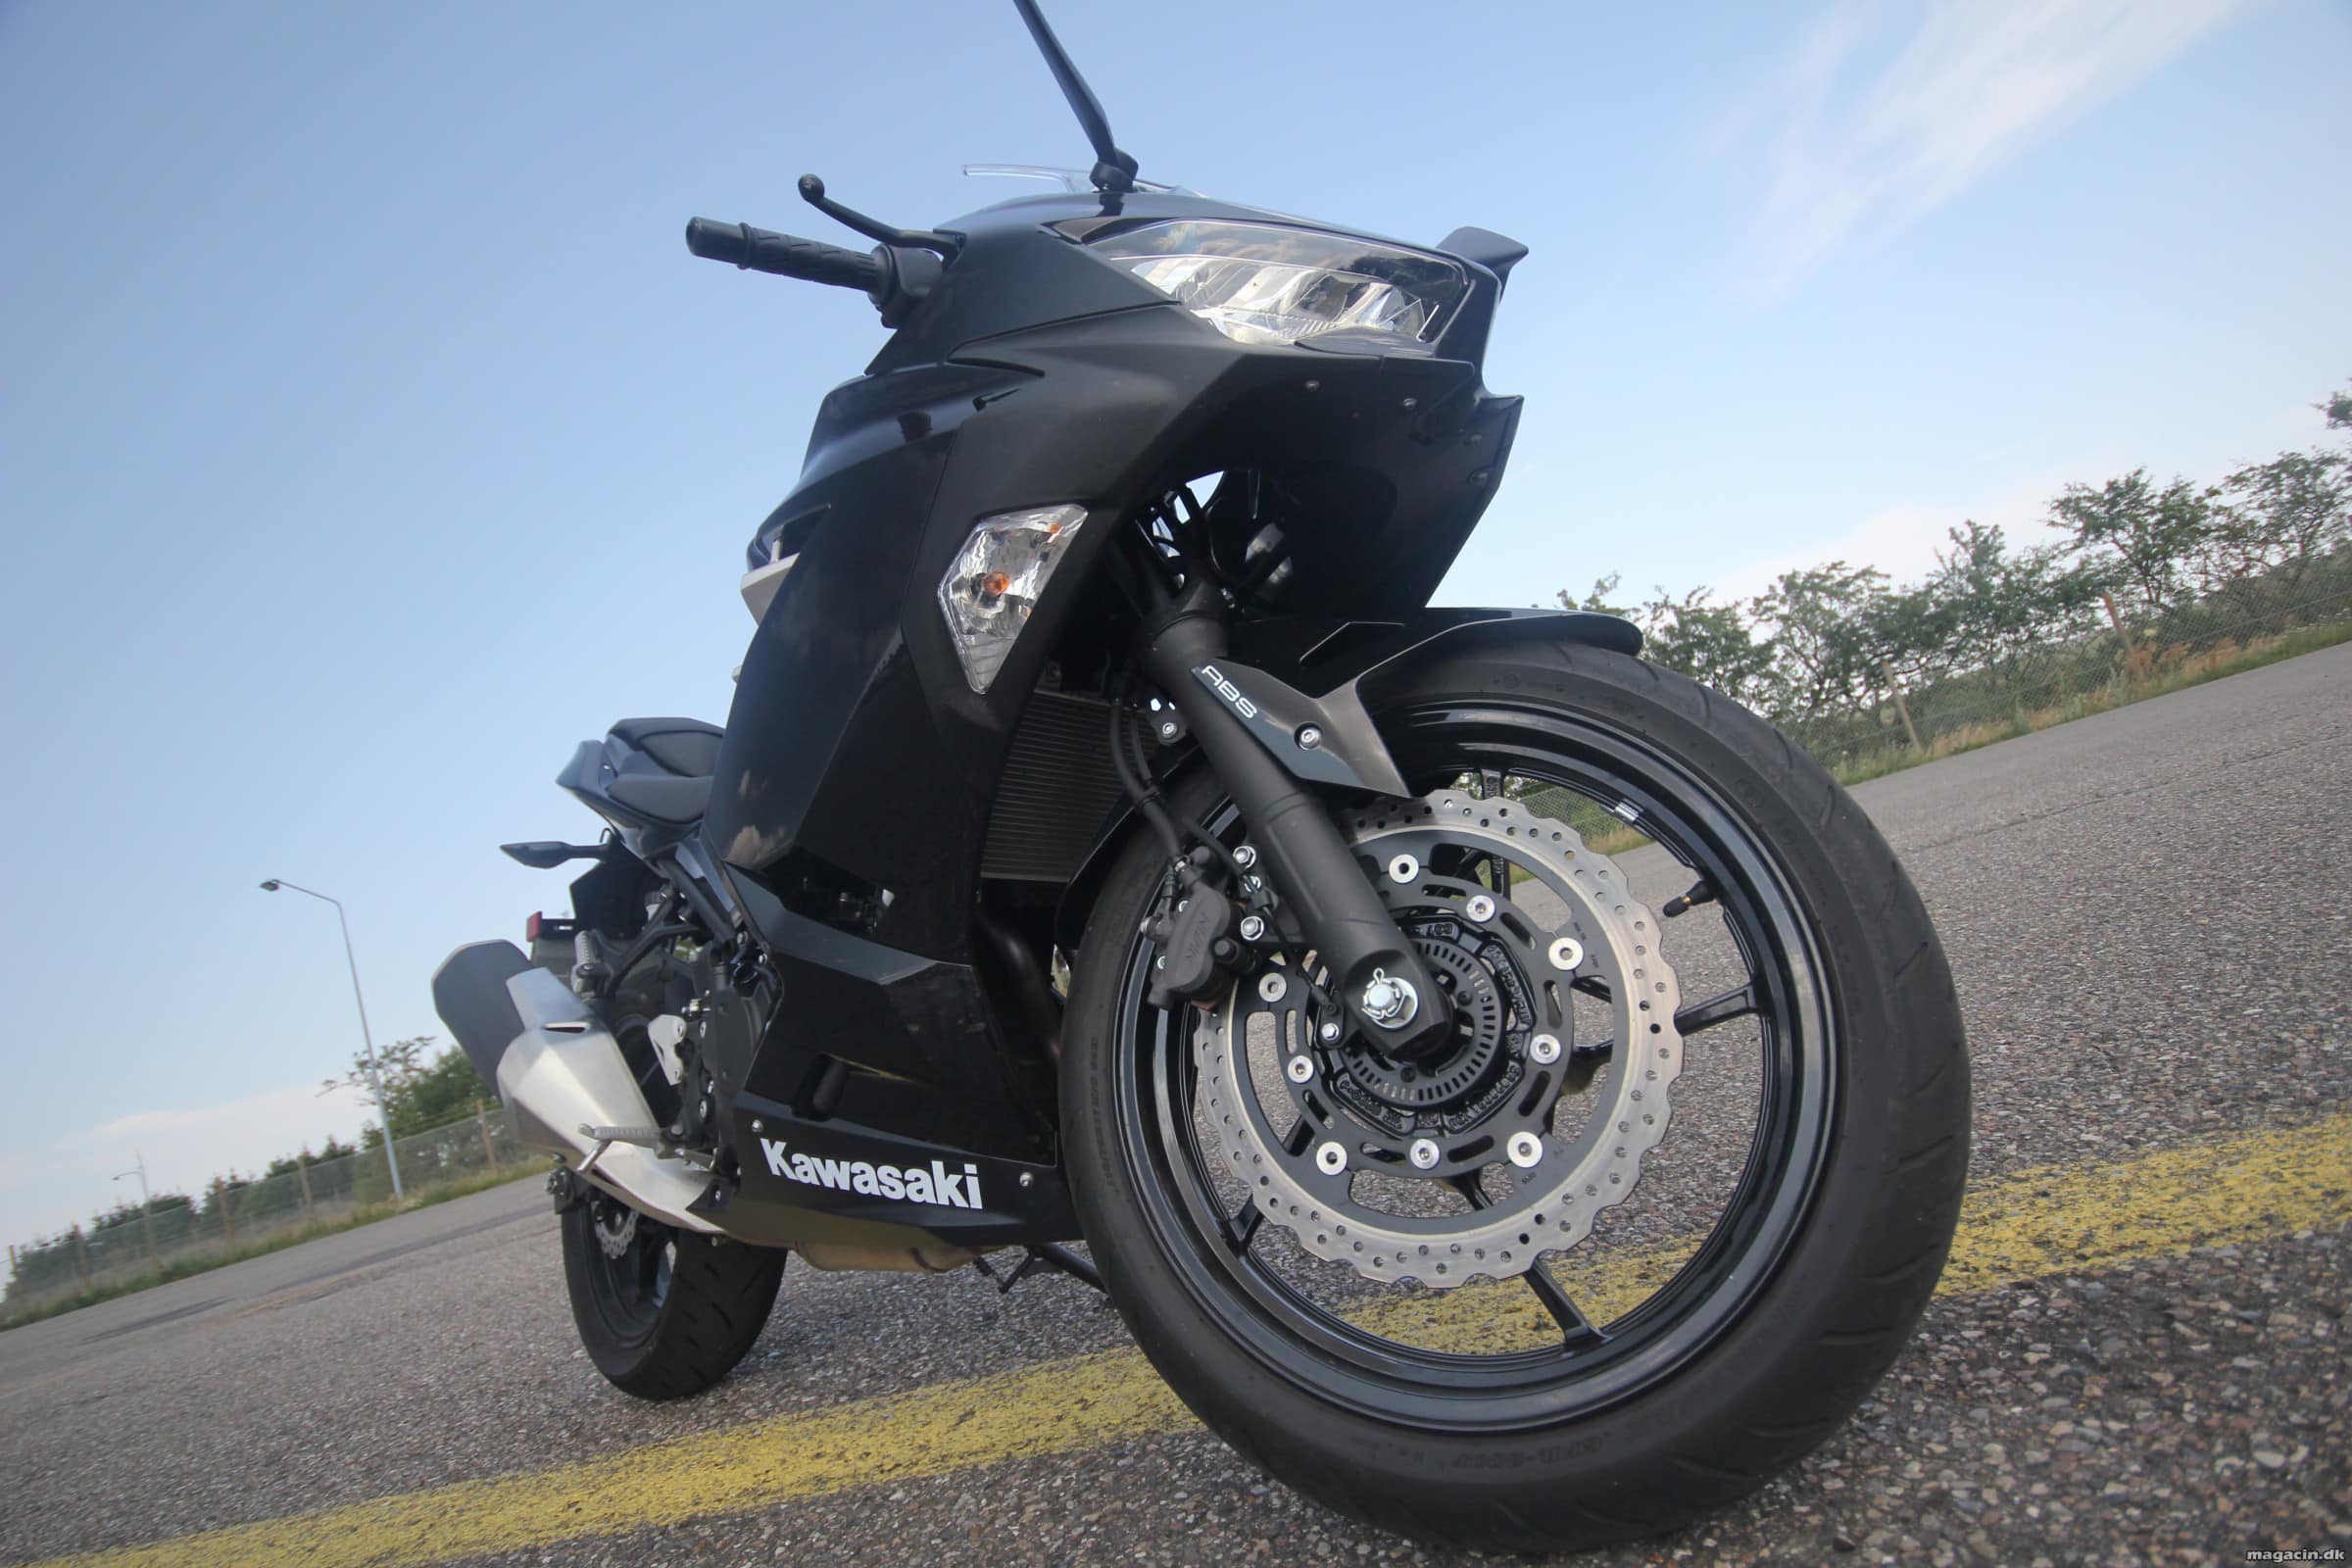 Test: Kawasaki Ninja 400 med opgaven